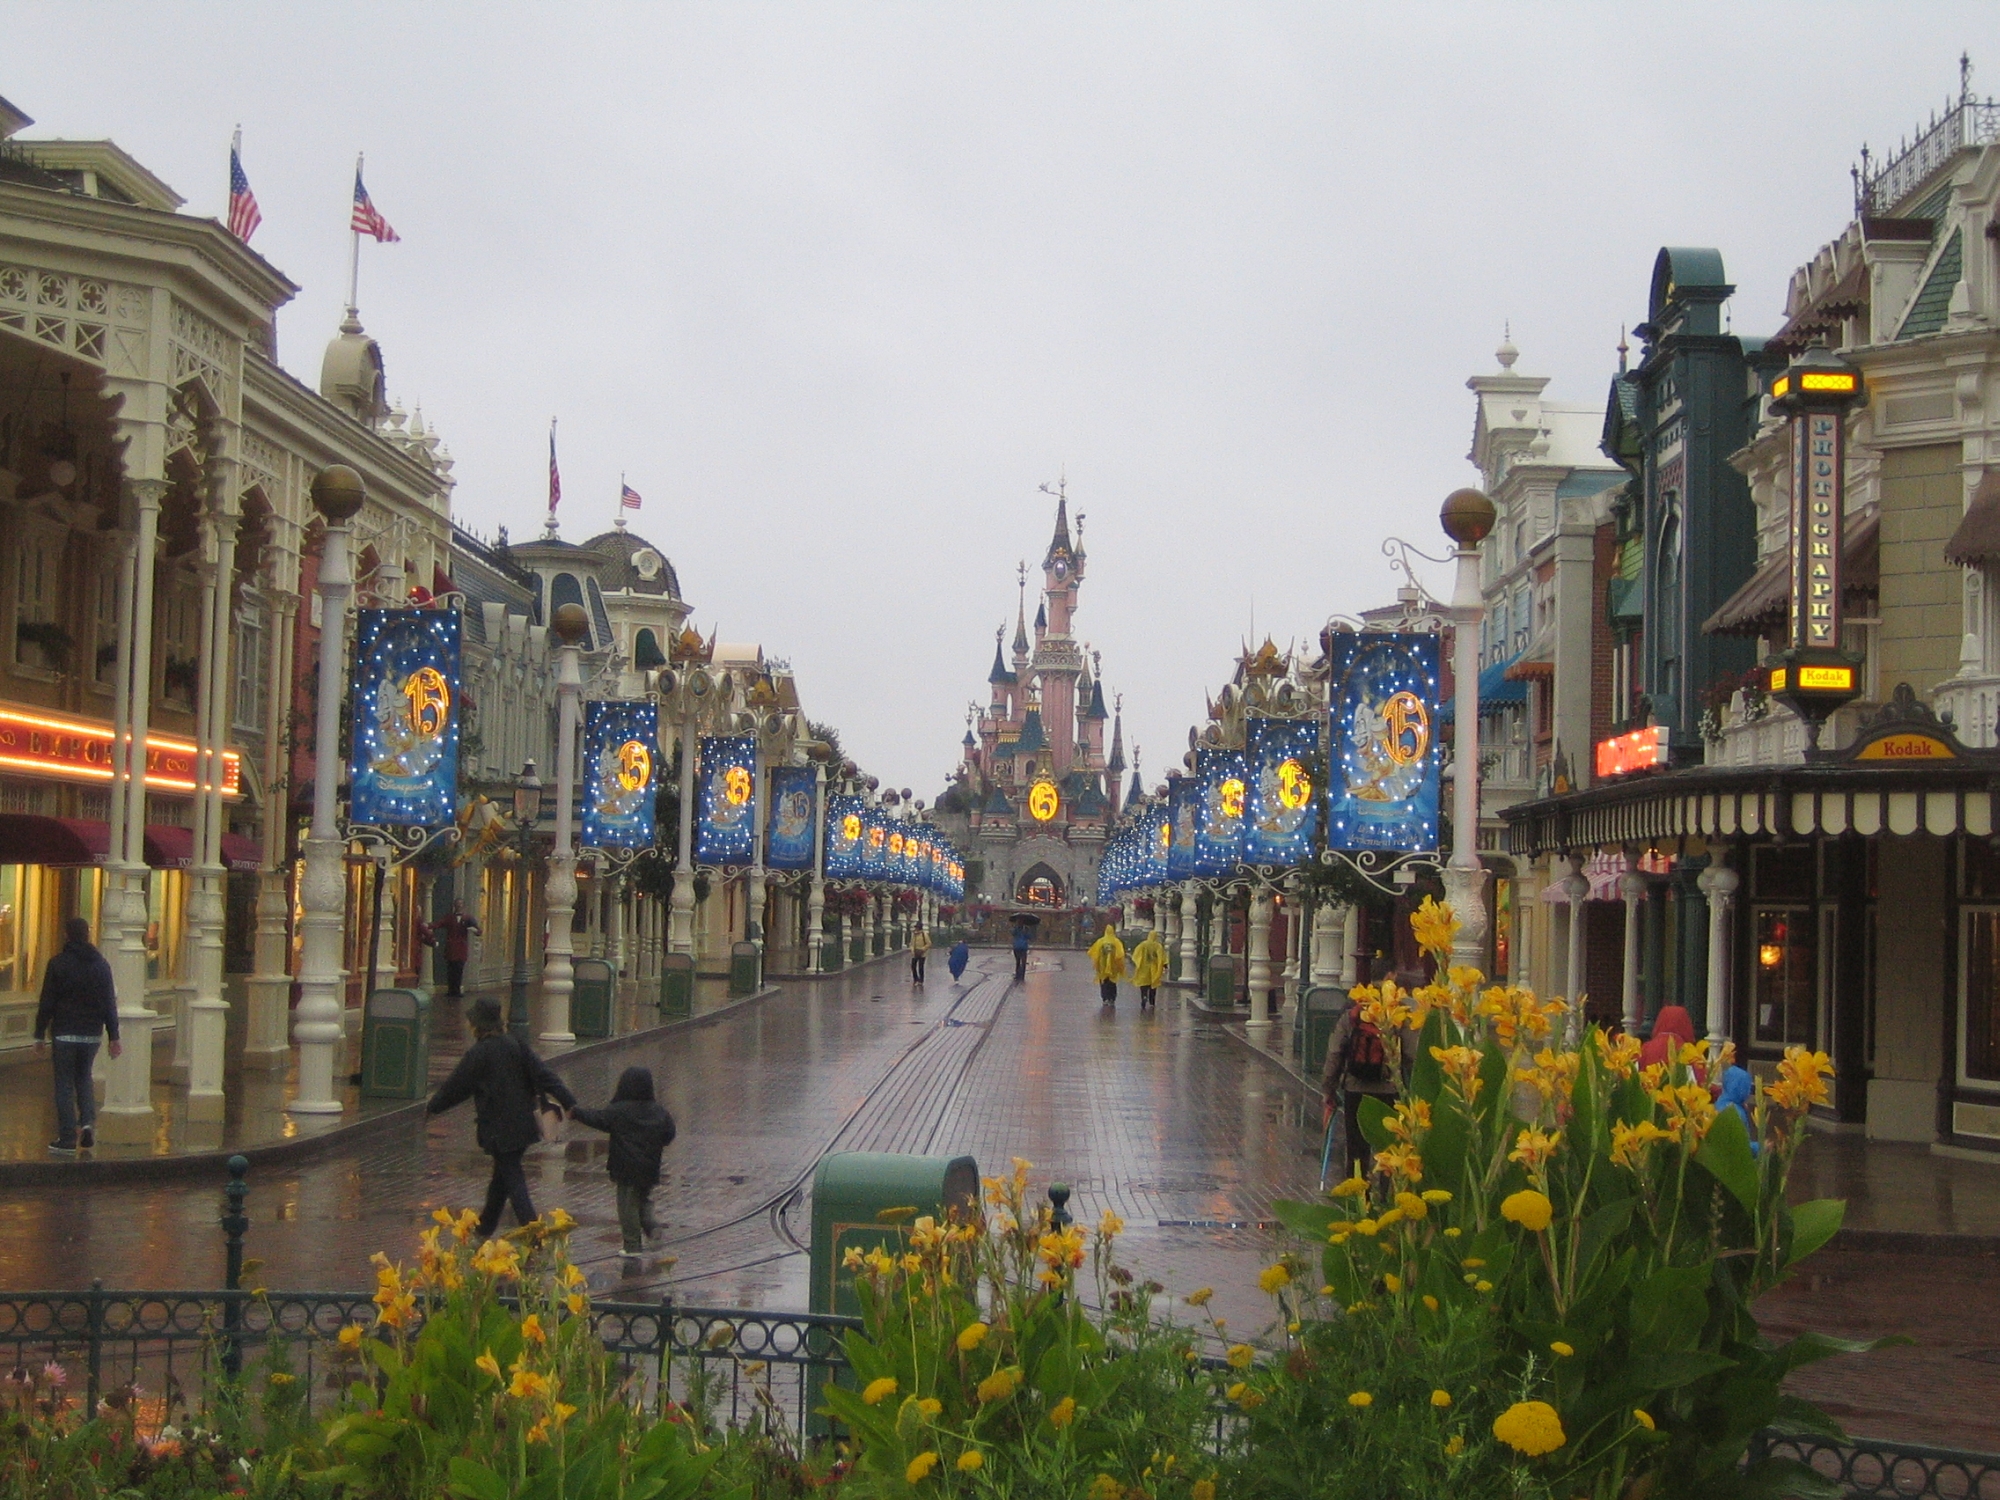 Disneyland Paris - Main Street, U.S.A. - Sleeping Beauty Castle